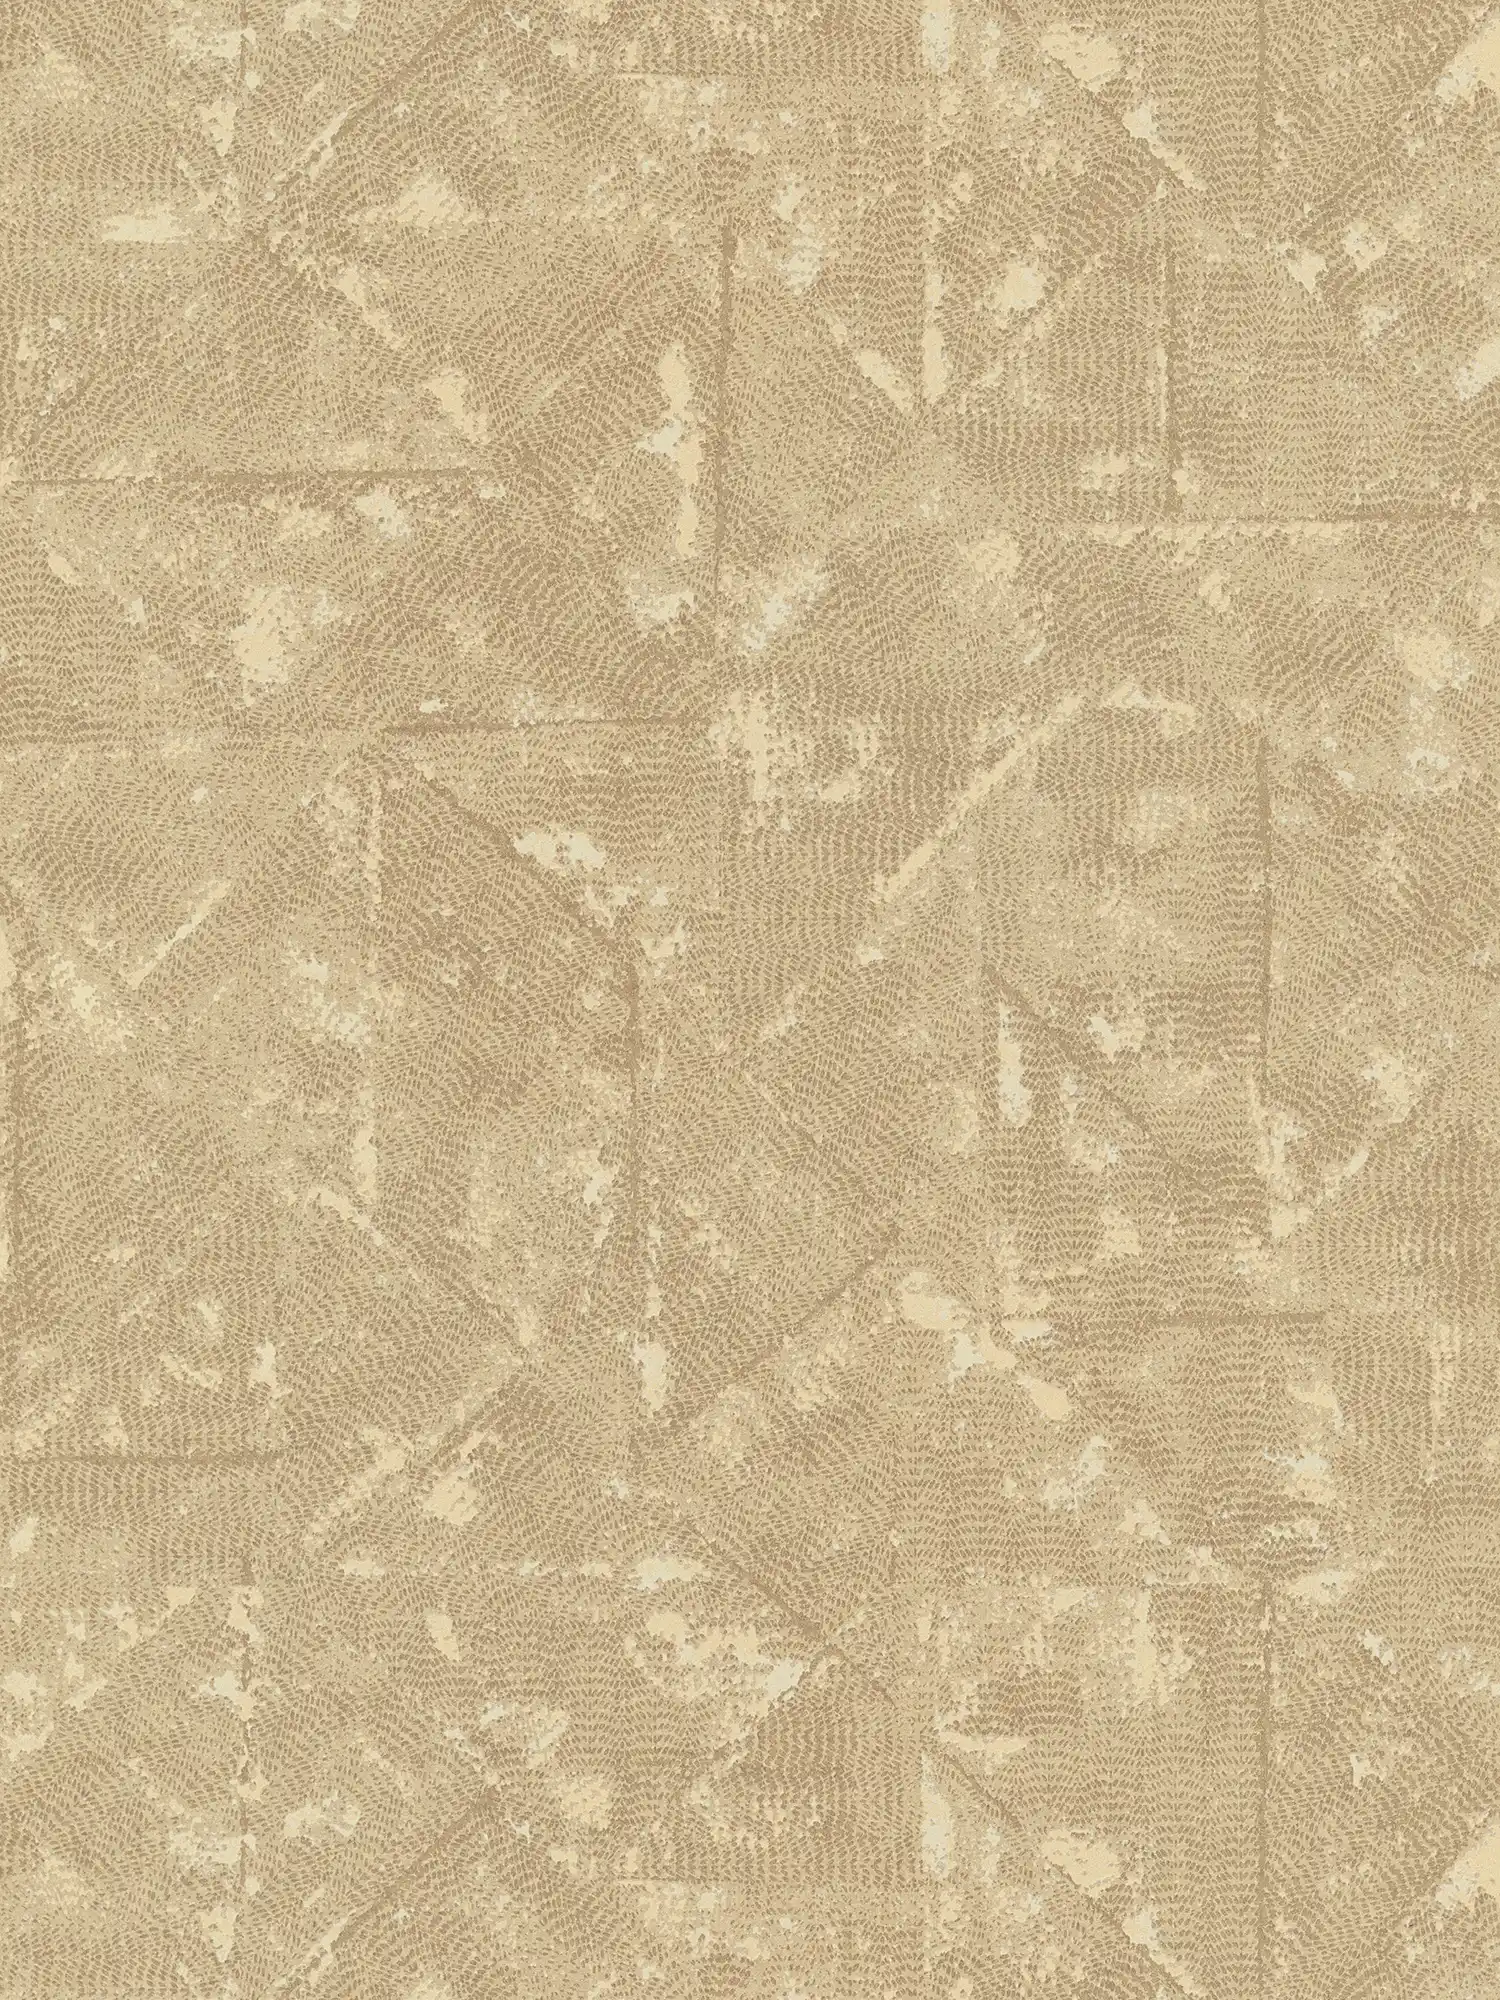 Plain non-woven wallpaper with asymmetrical details - beige, brown, gold
